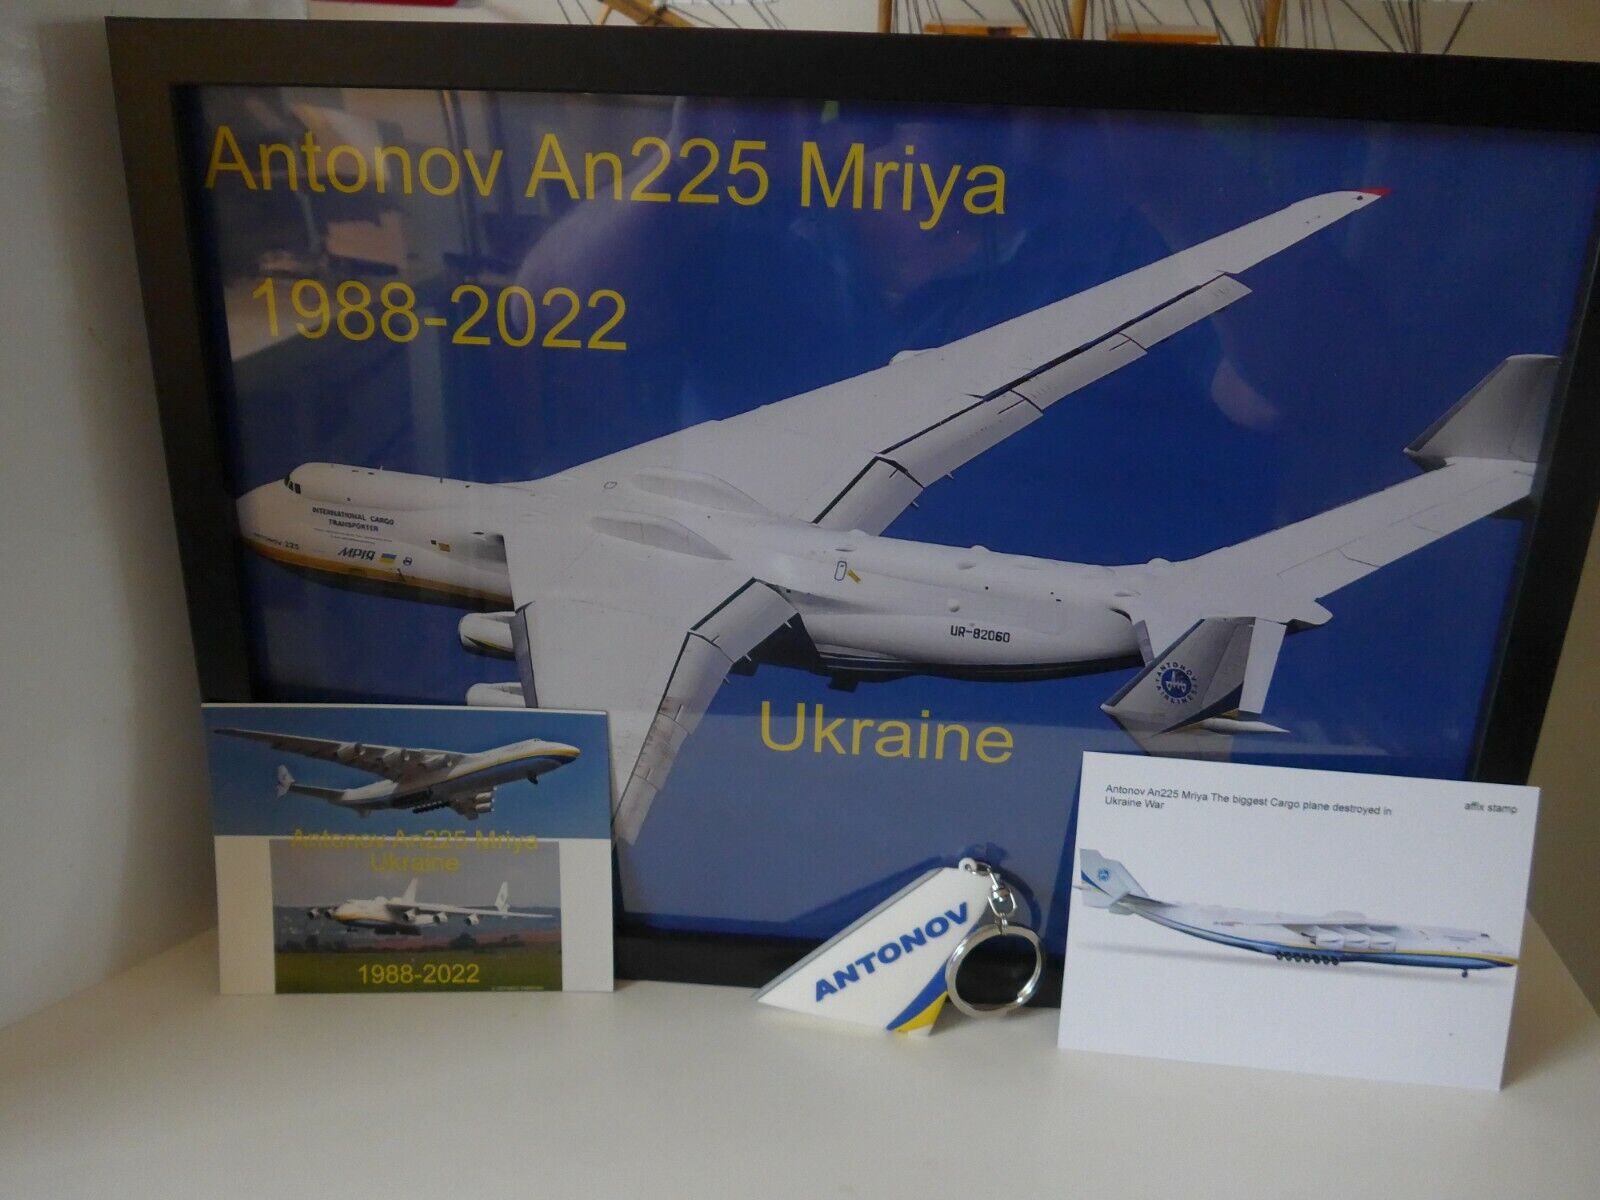 Antonov An225 Mriya Memorabilia a tribute to this great Ukranian Aircraft (Read)